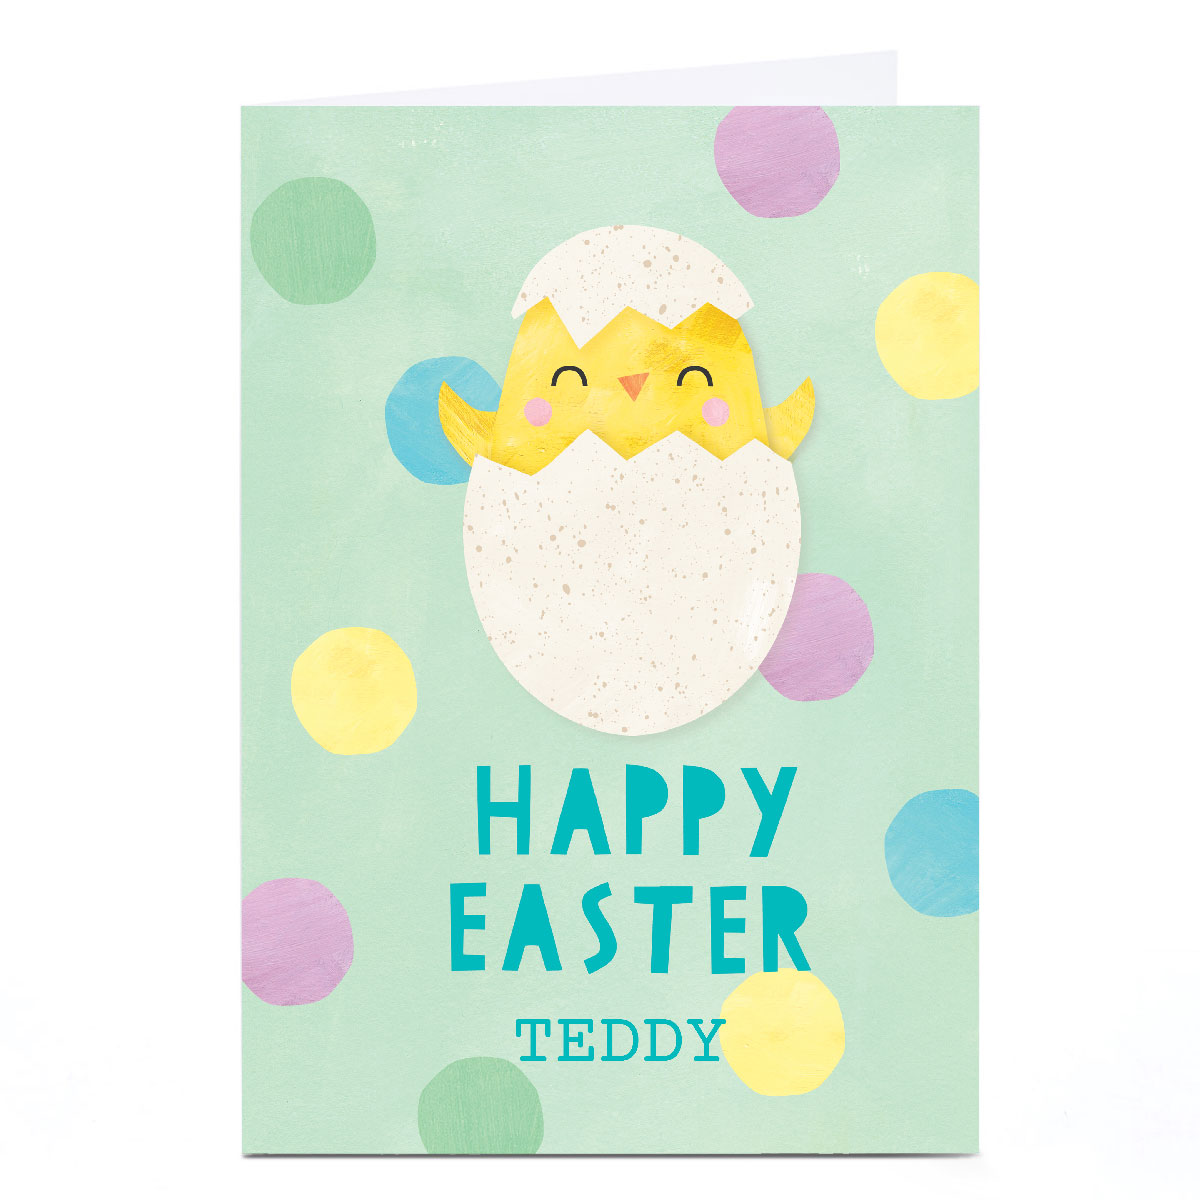 Personalised Lemon & Sugar Easter Card - Chick in Egg